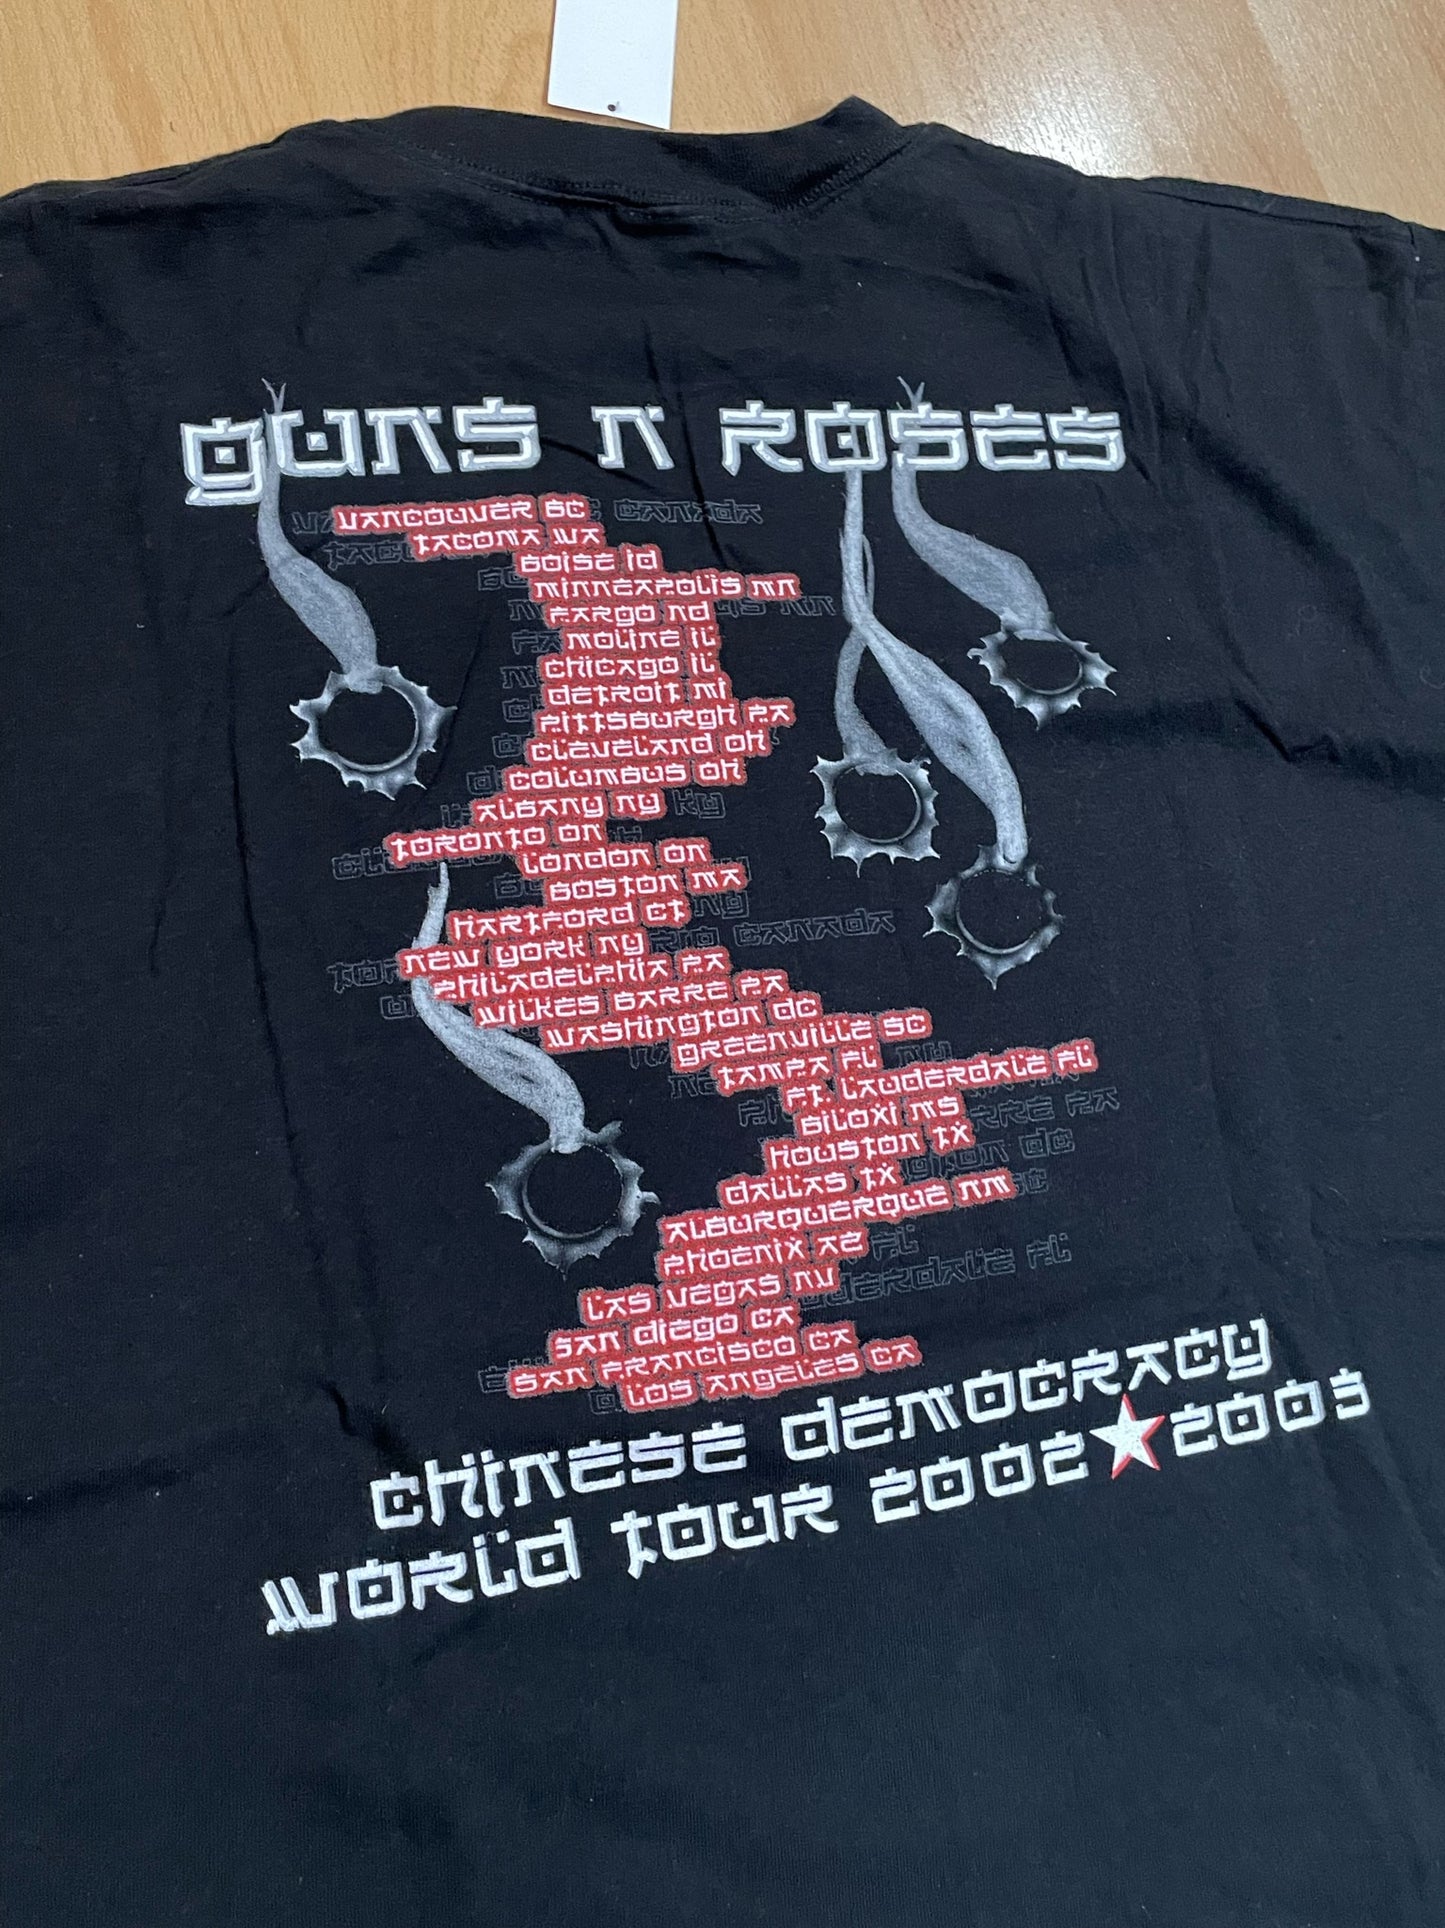 GUNS N ROSES "WORLD TOUR 2002-2003" MUSIC BAND T-SHIRT  SZ: XL